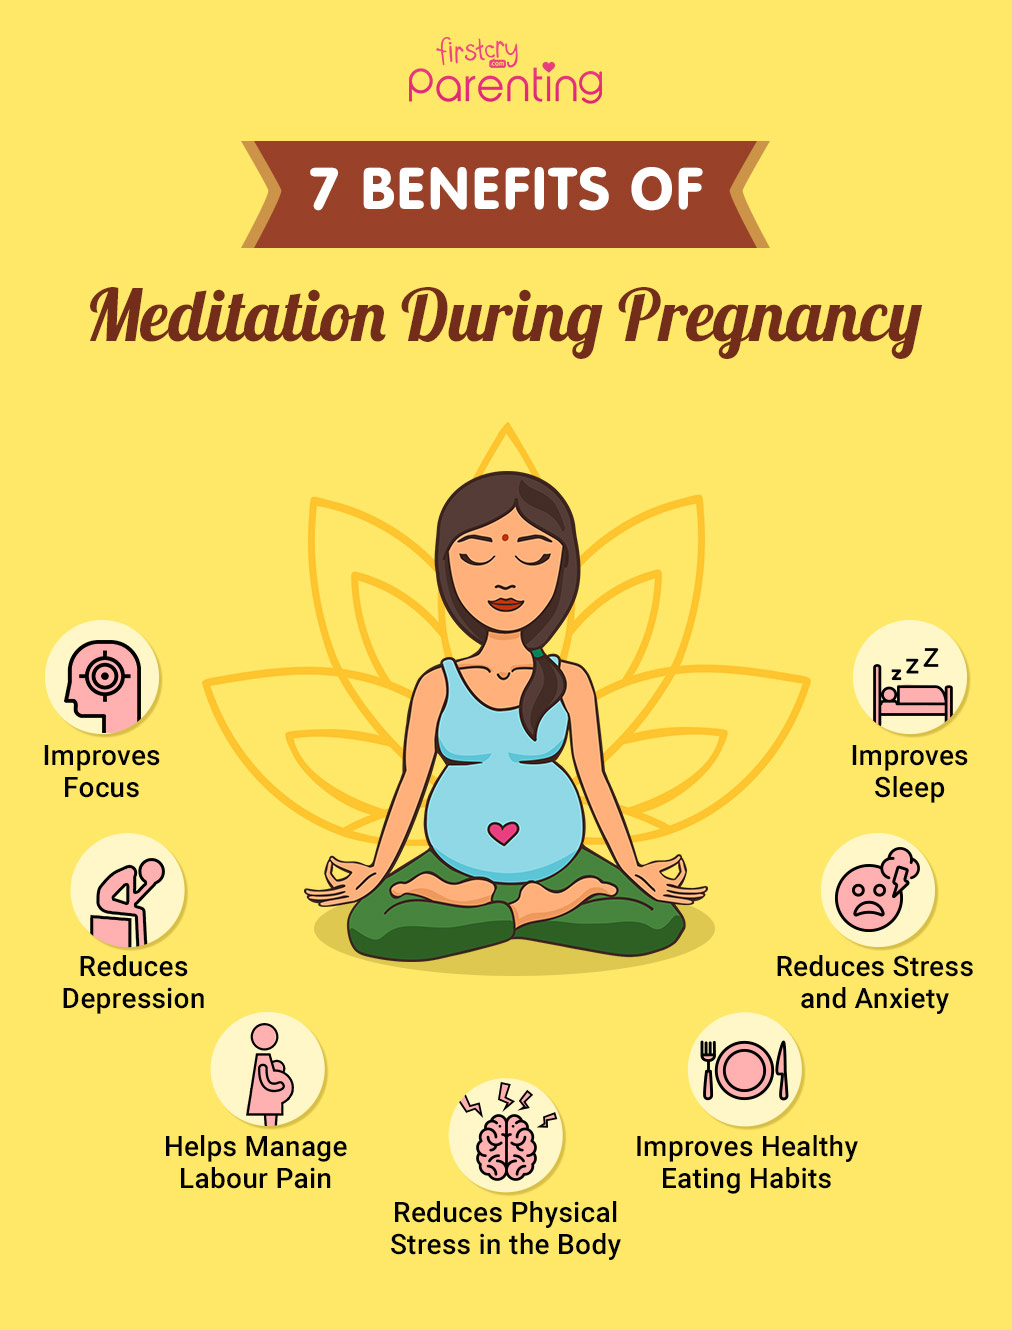 7 Benefits of Meditation During Pregnancy